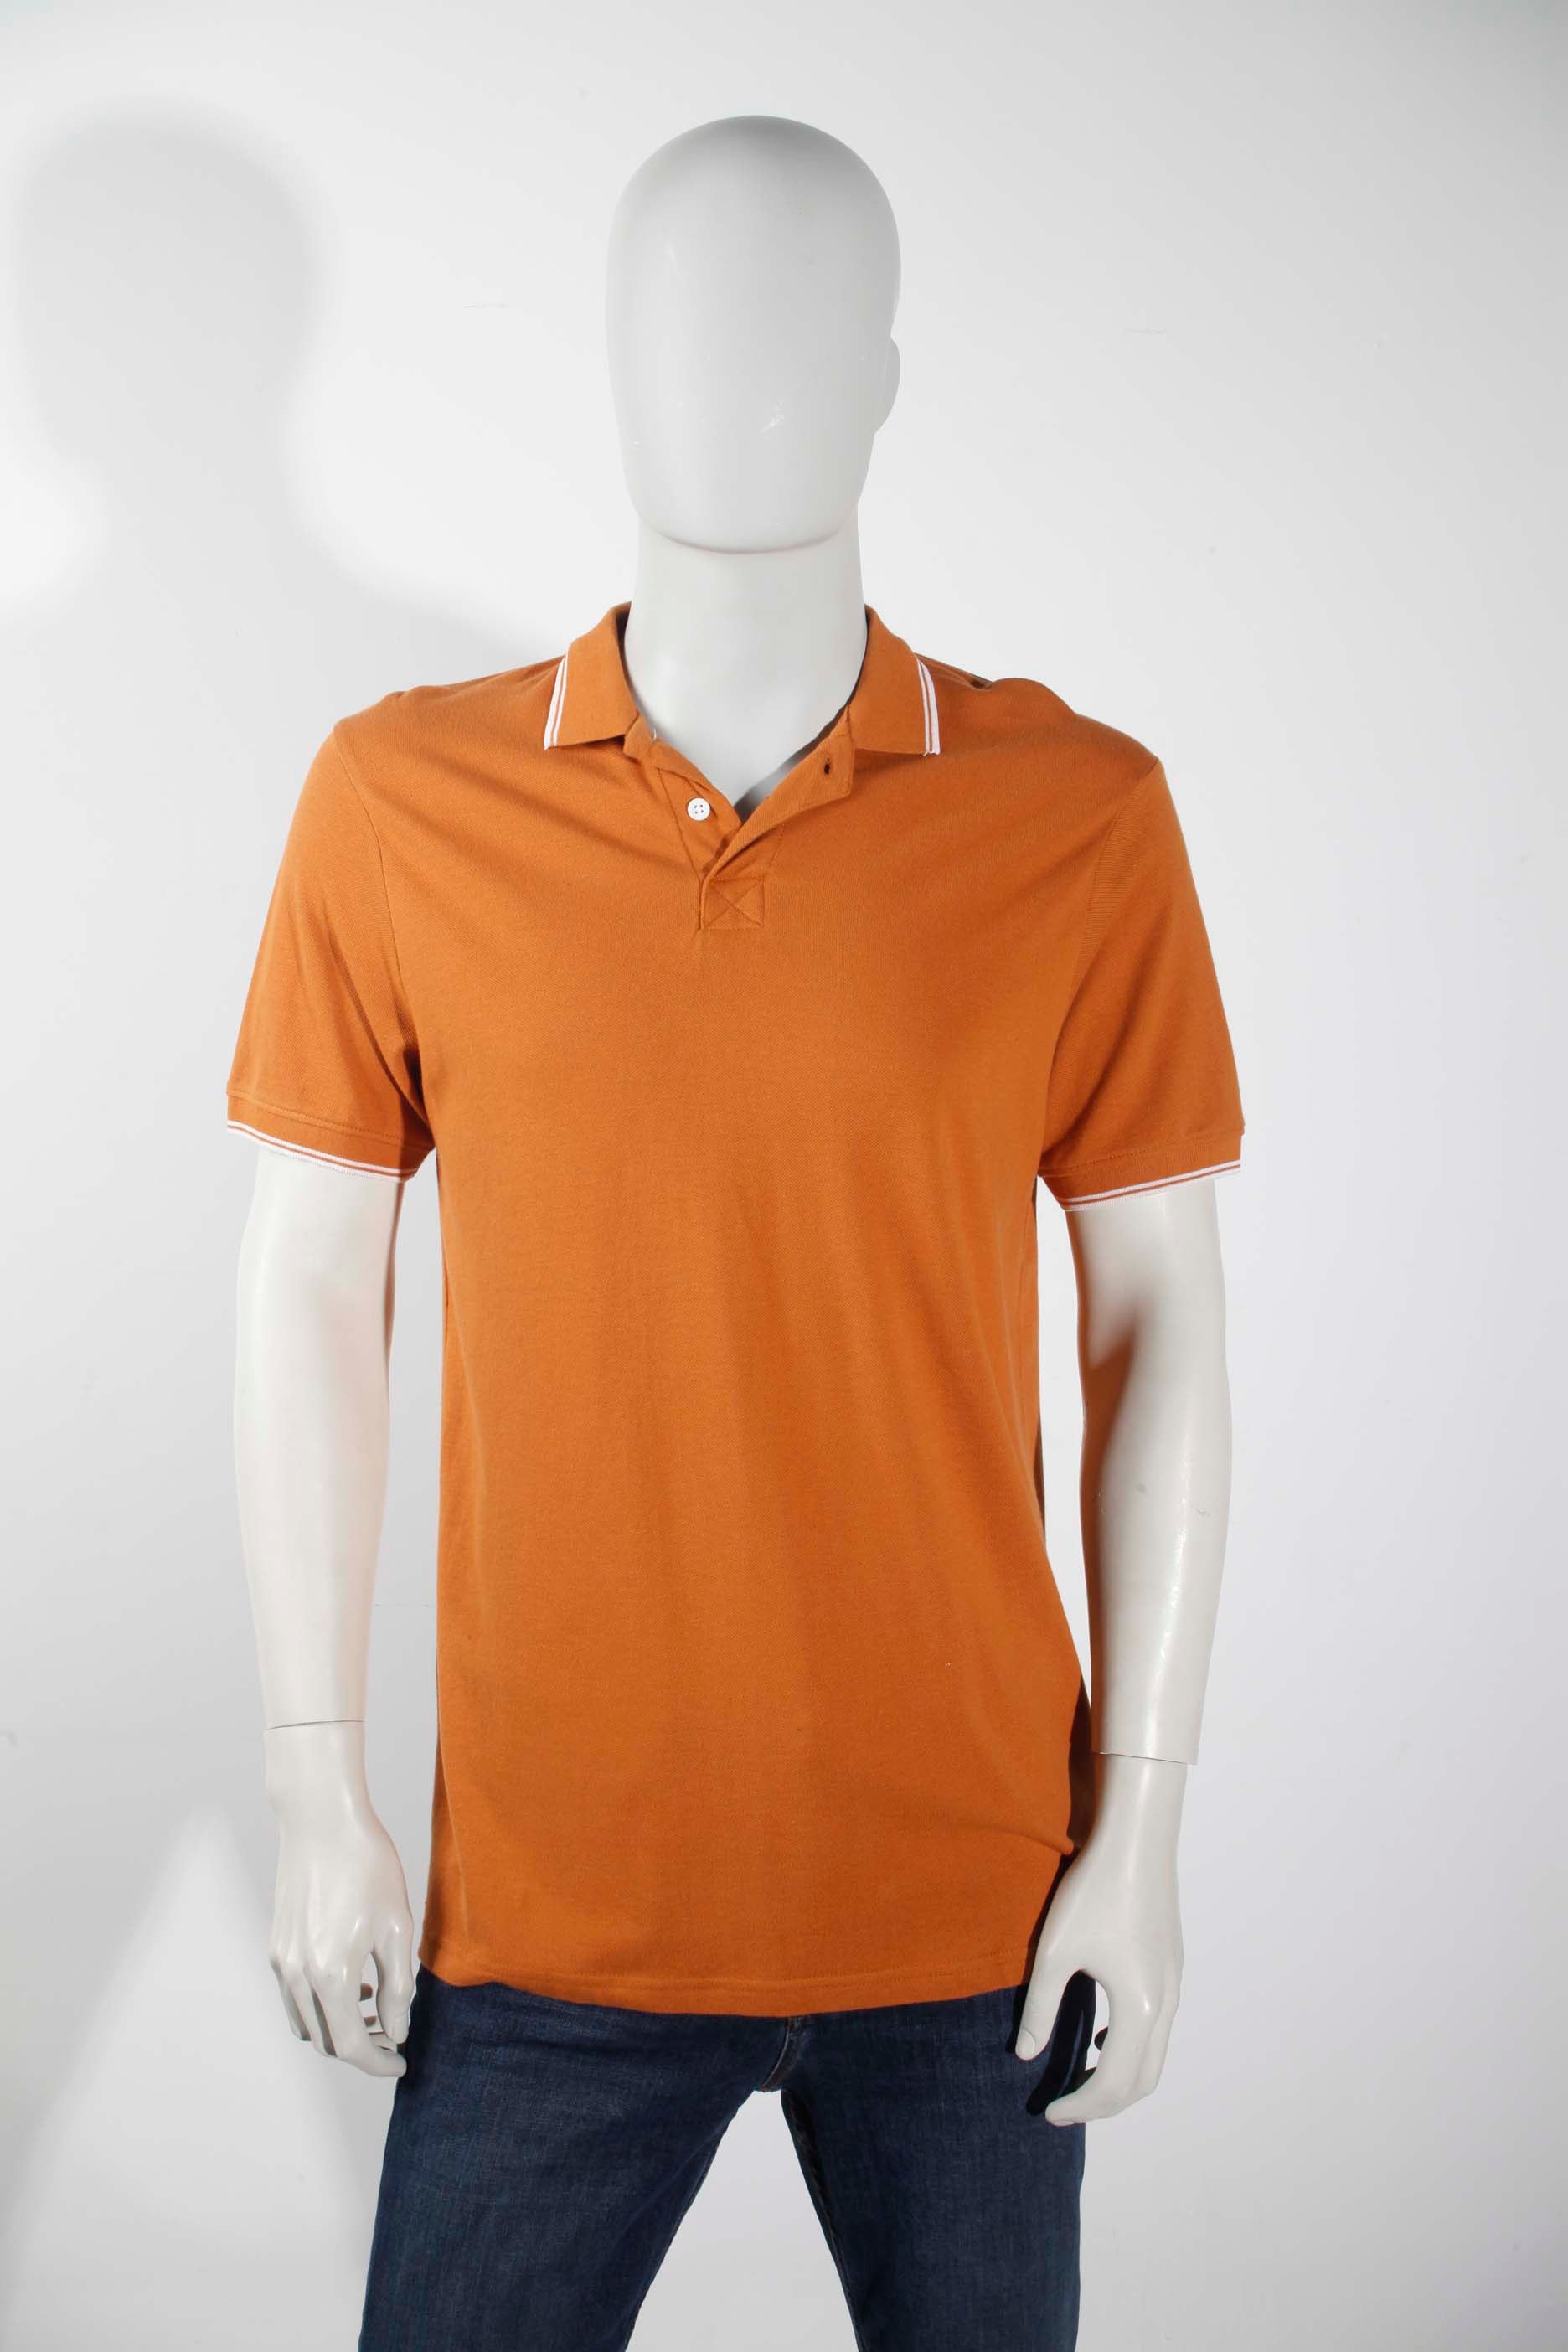 Mens Rust Orange Polo Shirt (Medium)